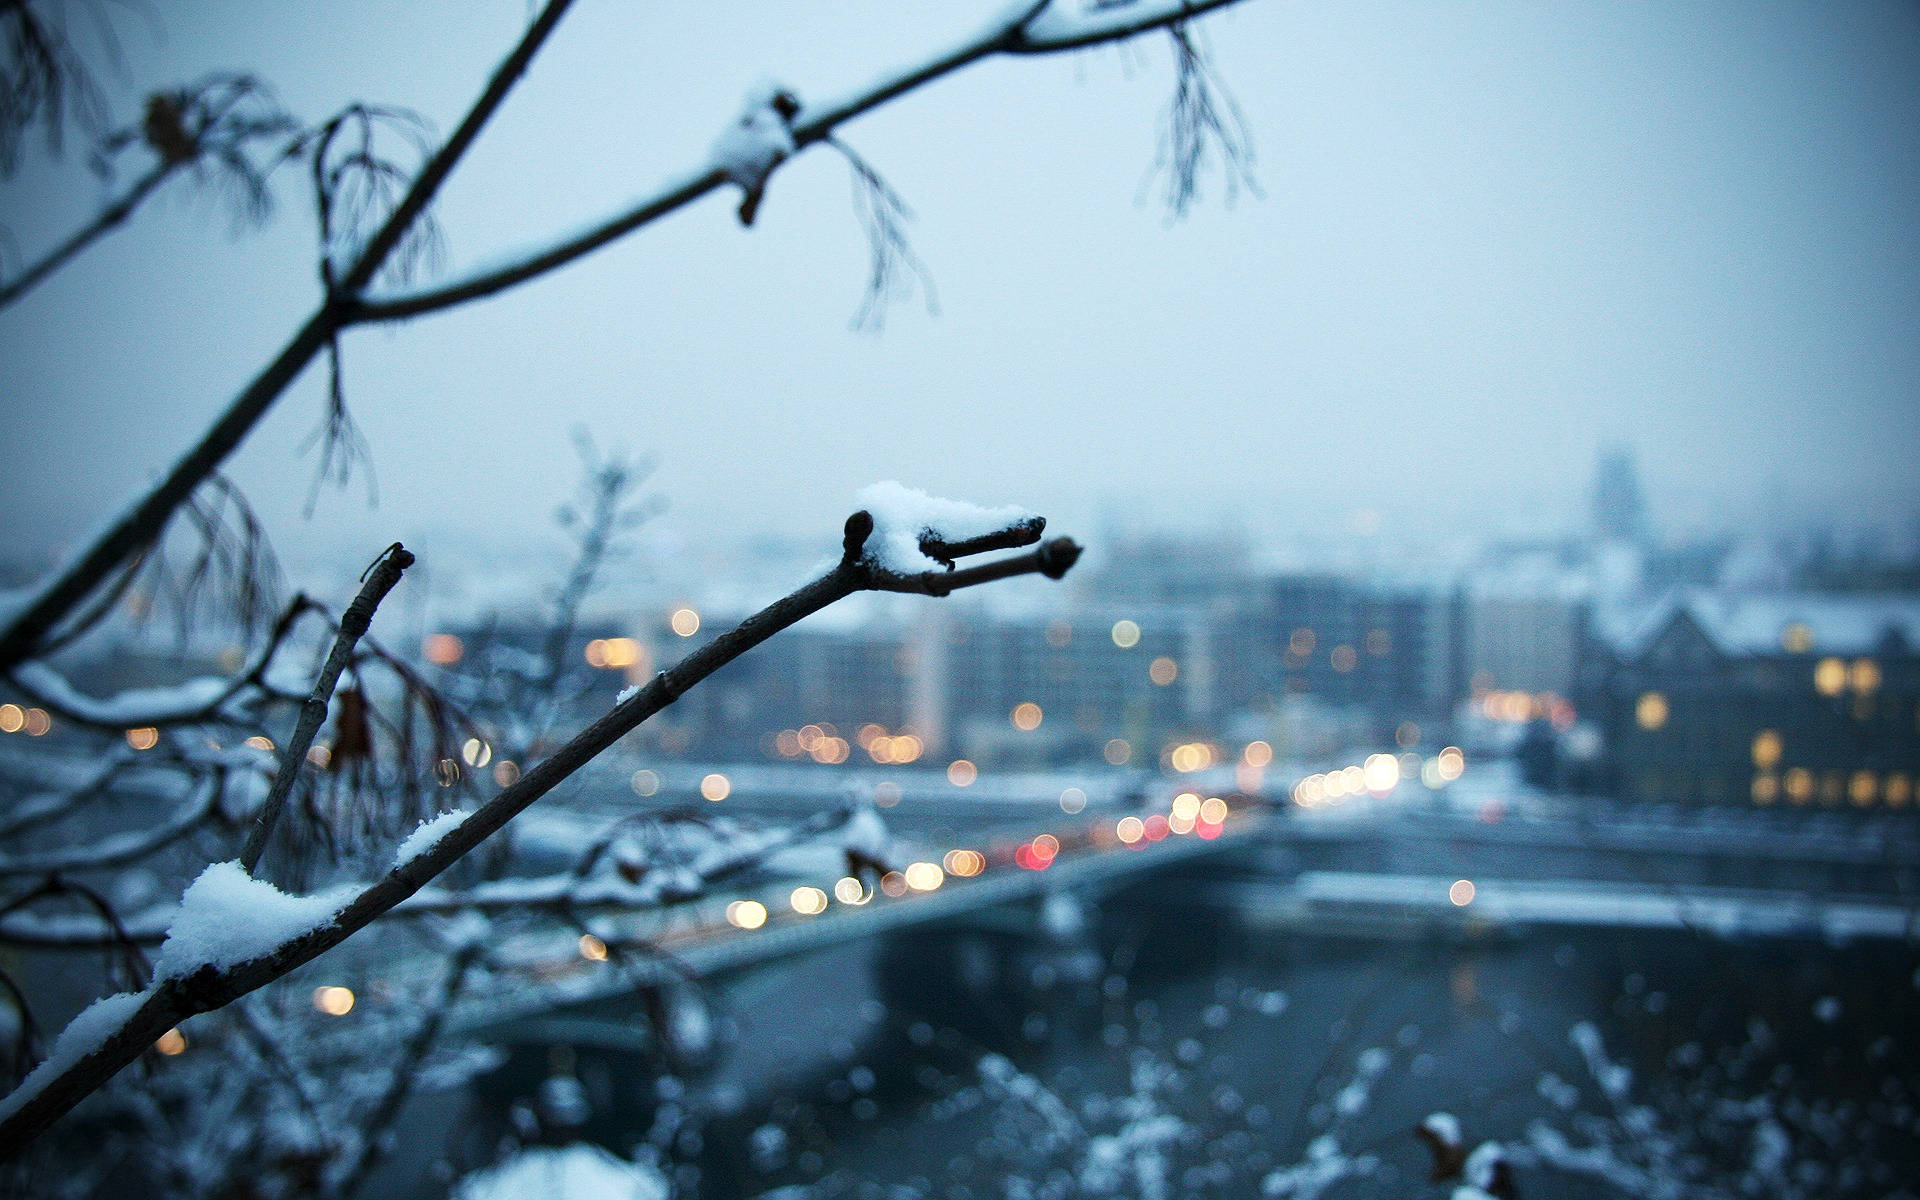 Dslr Blur Snowy City Background